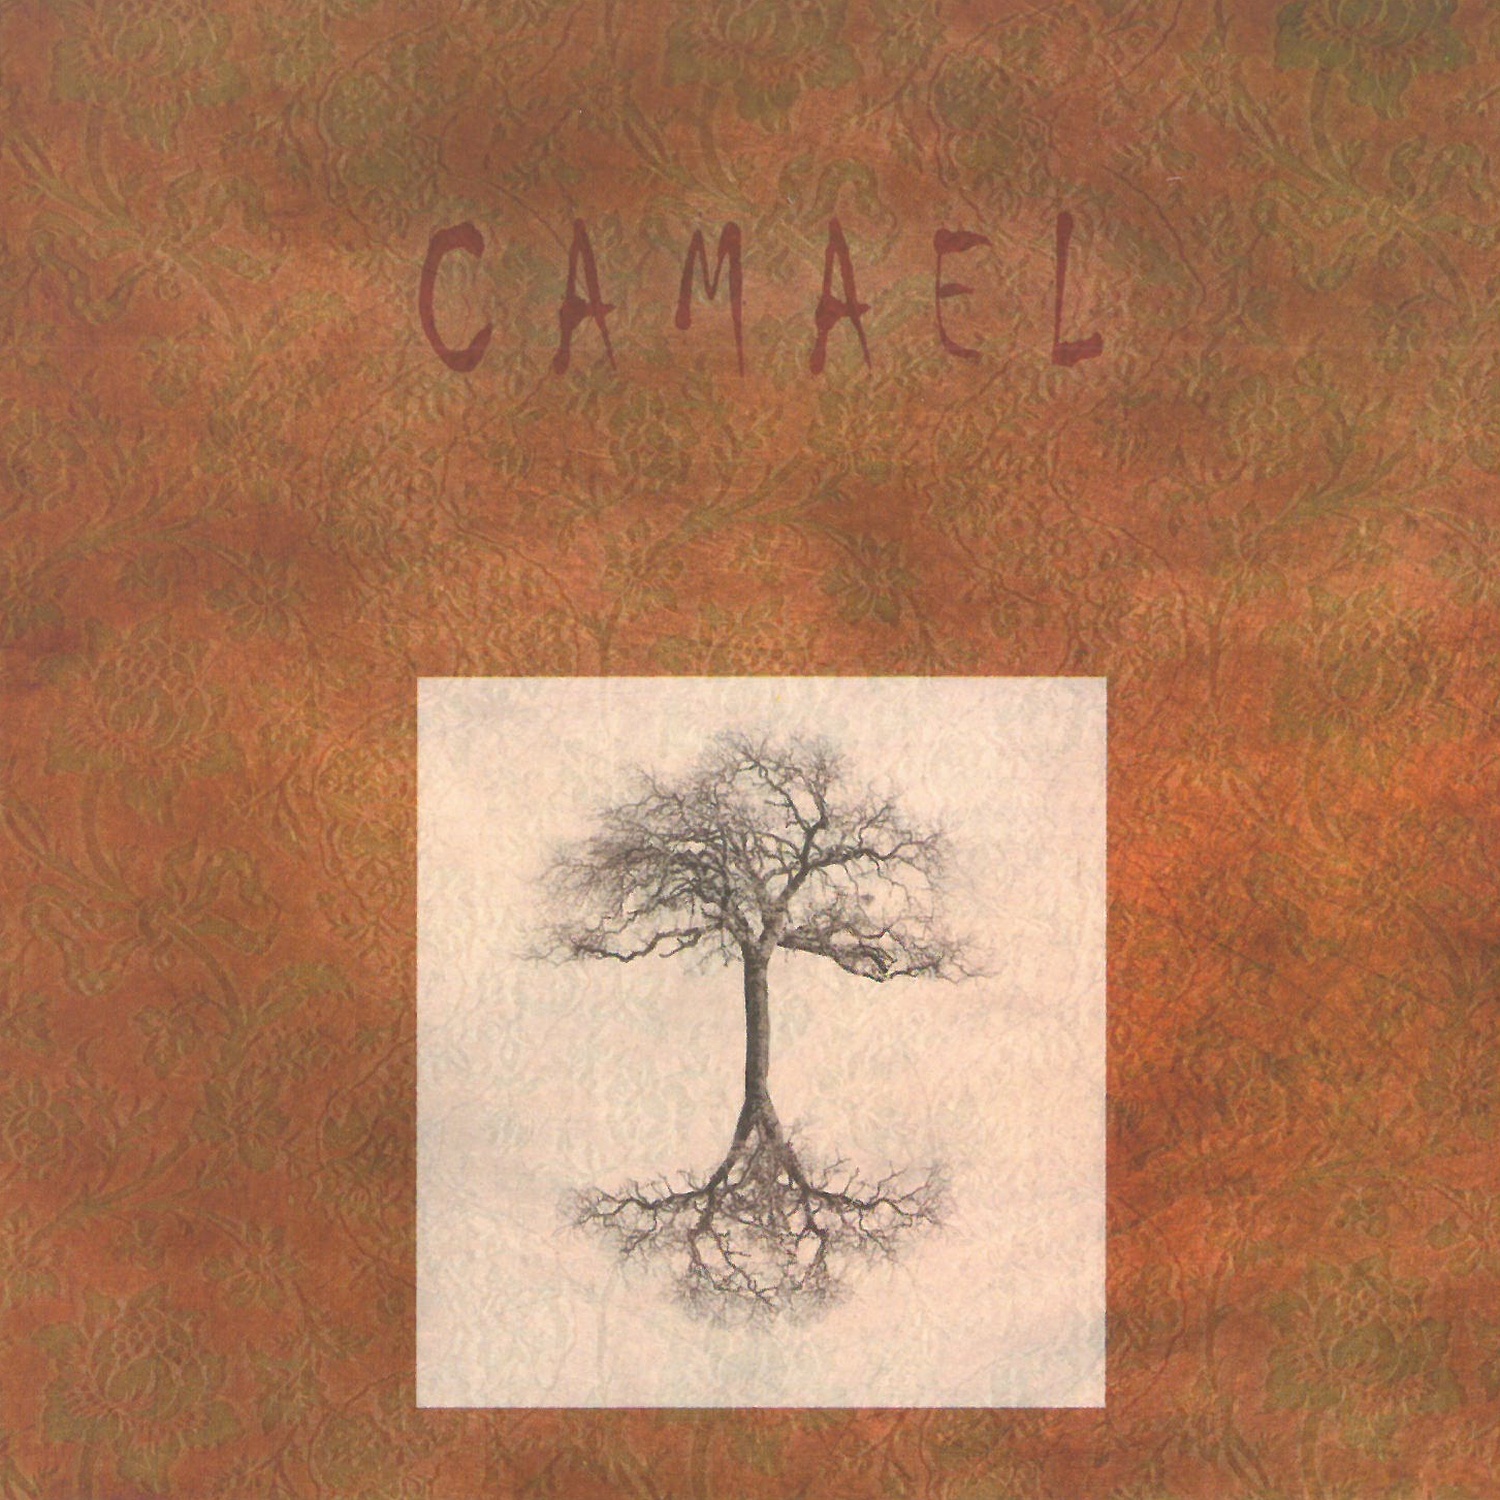 CD Shop - CAMAEL CAMAEL